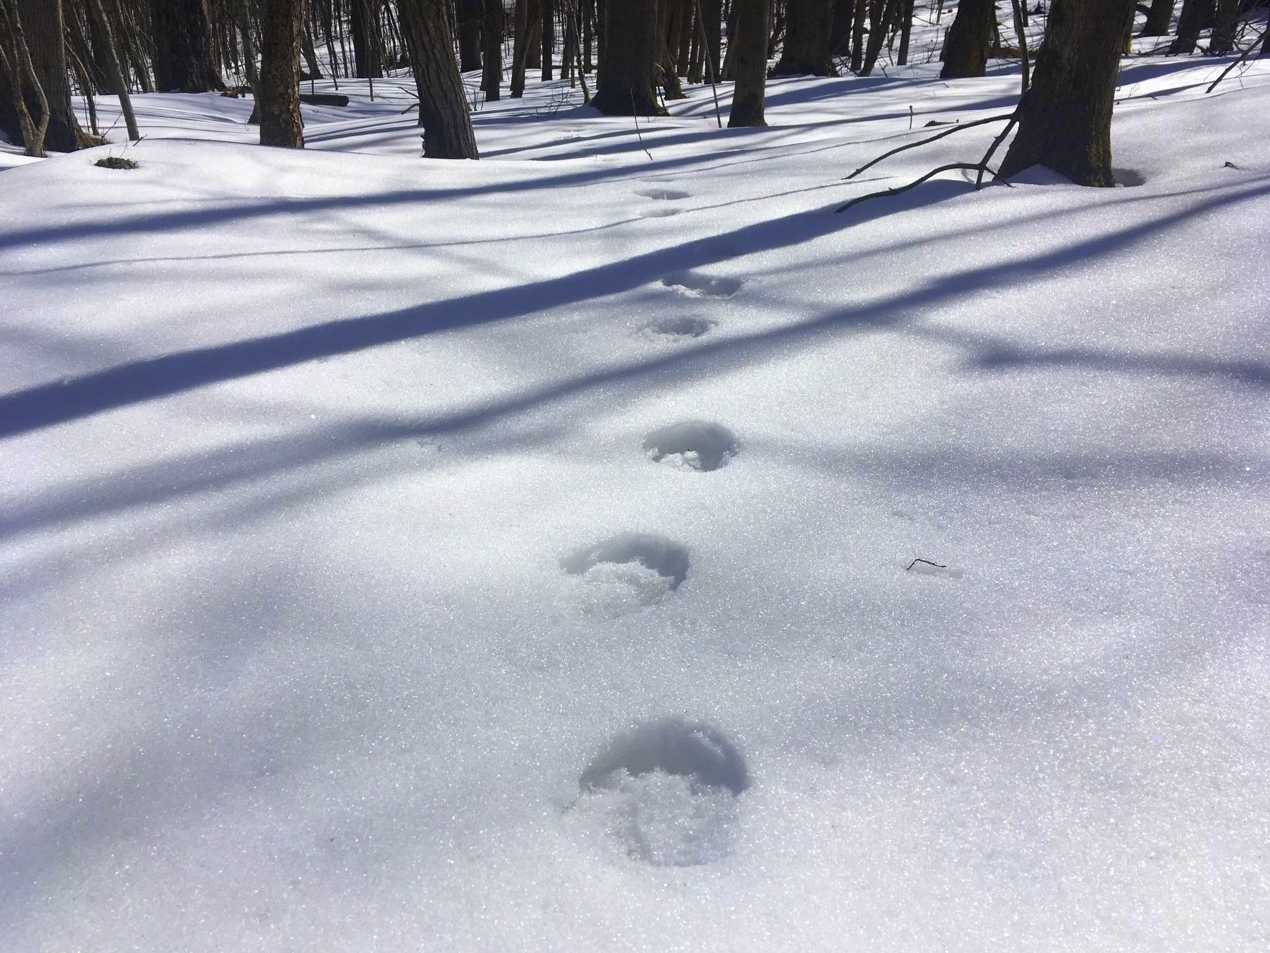 Bear tracks in snow